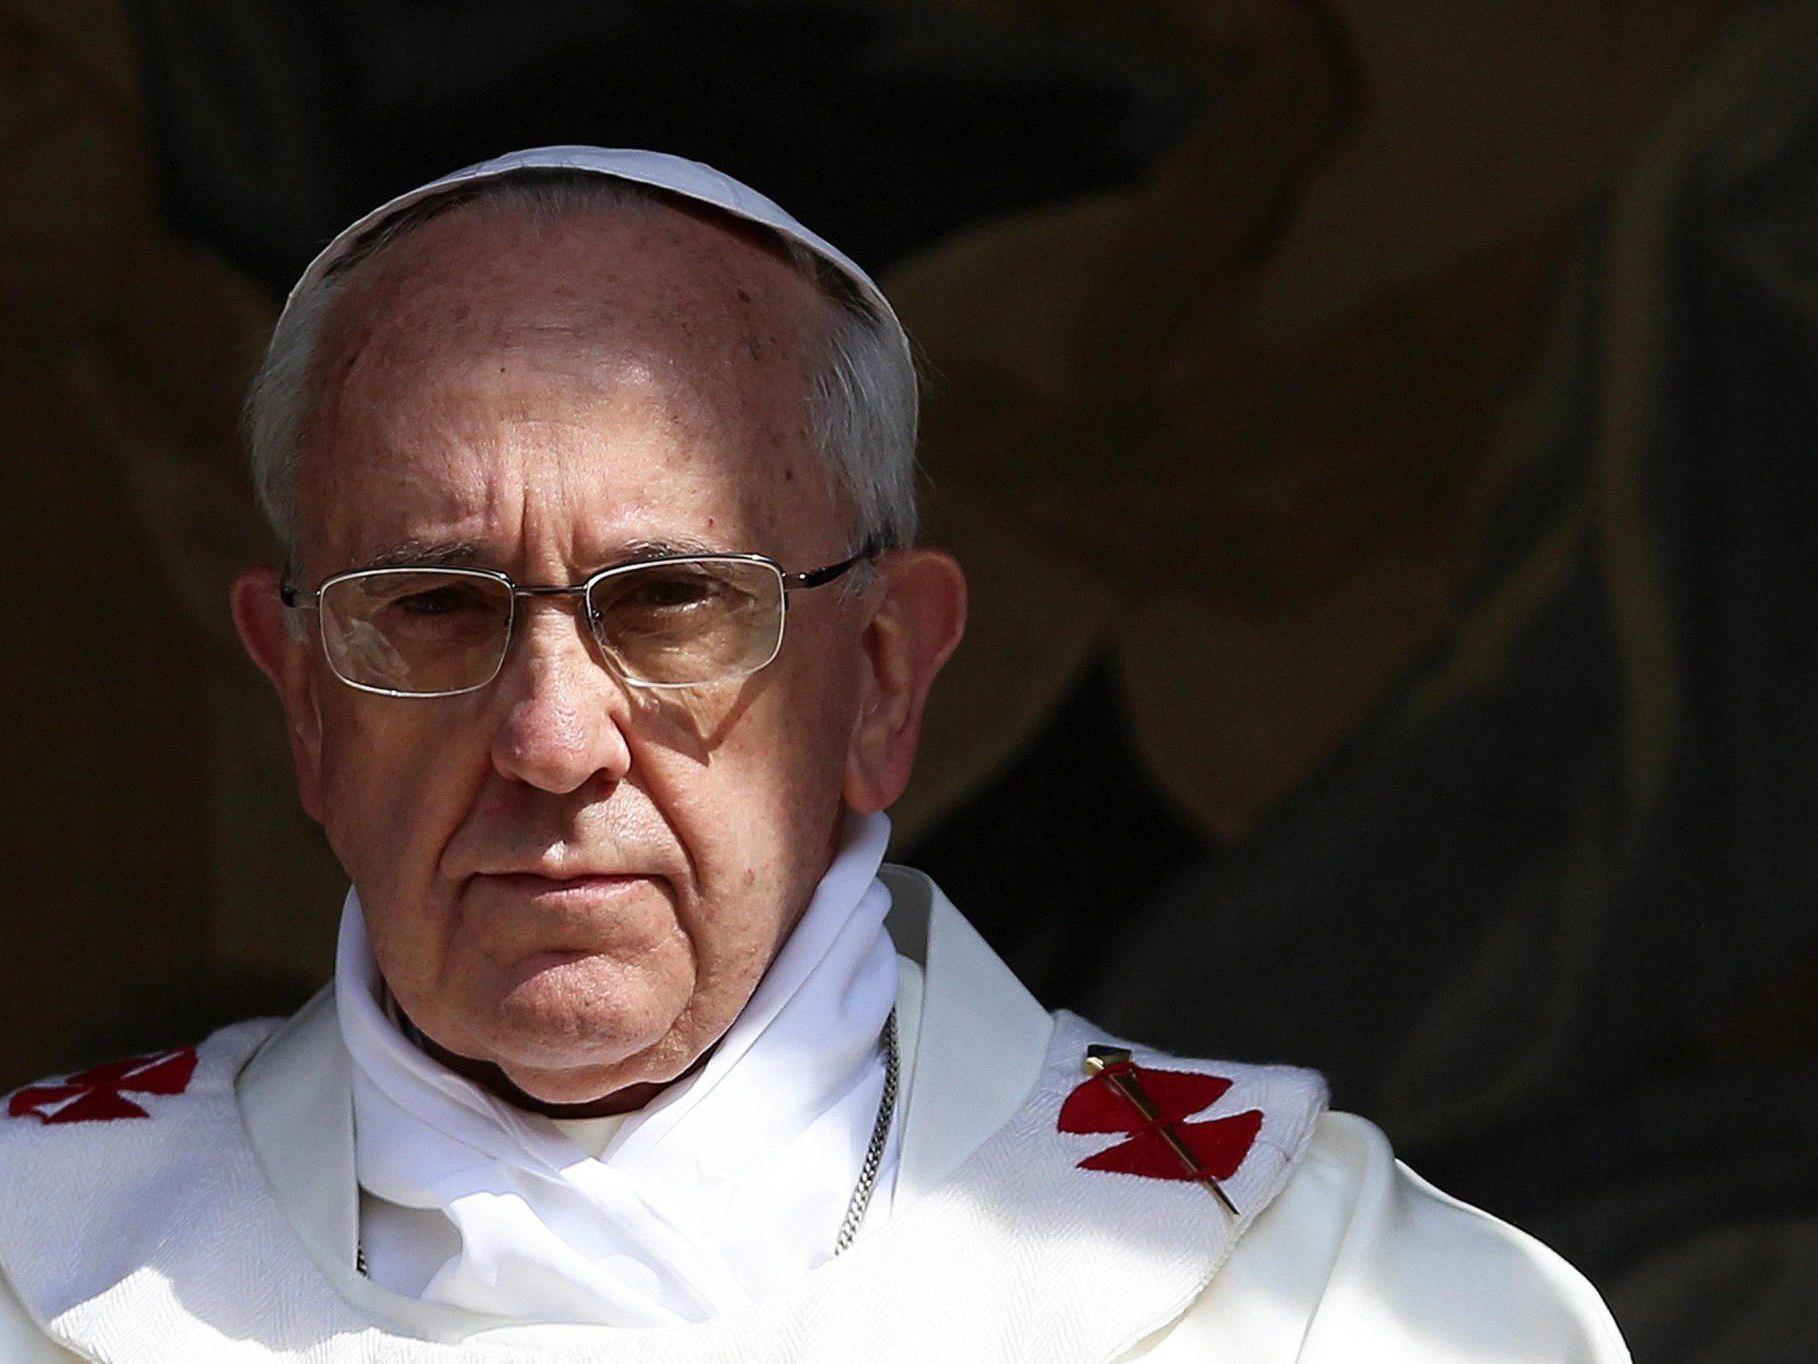 Папа римский говорит. Папа Франциск. Папа Римский Франци́ск. Понтифик папа Римский Франциск. Папа Римский Франциск 2013.